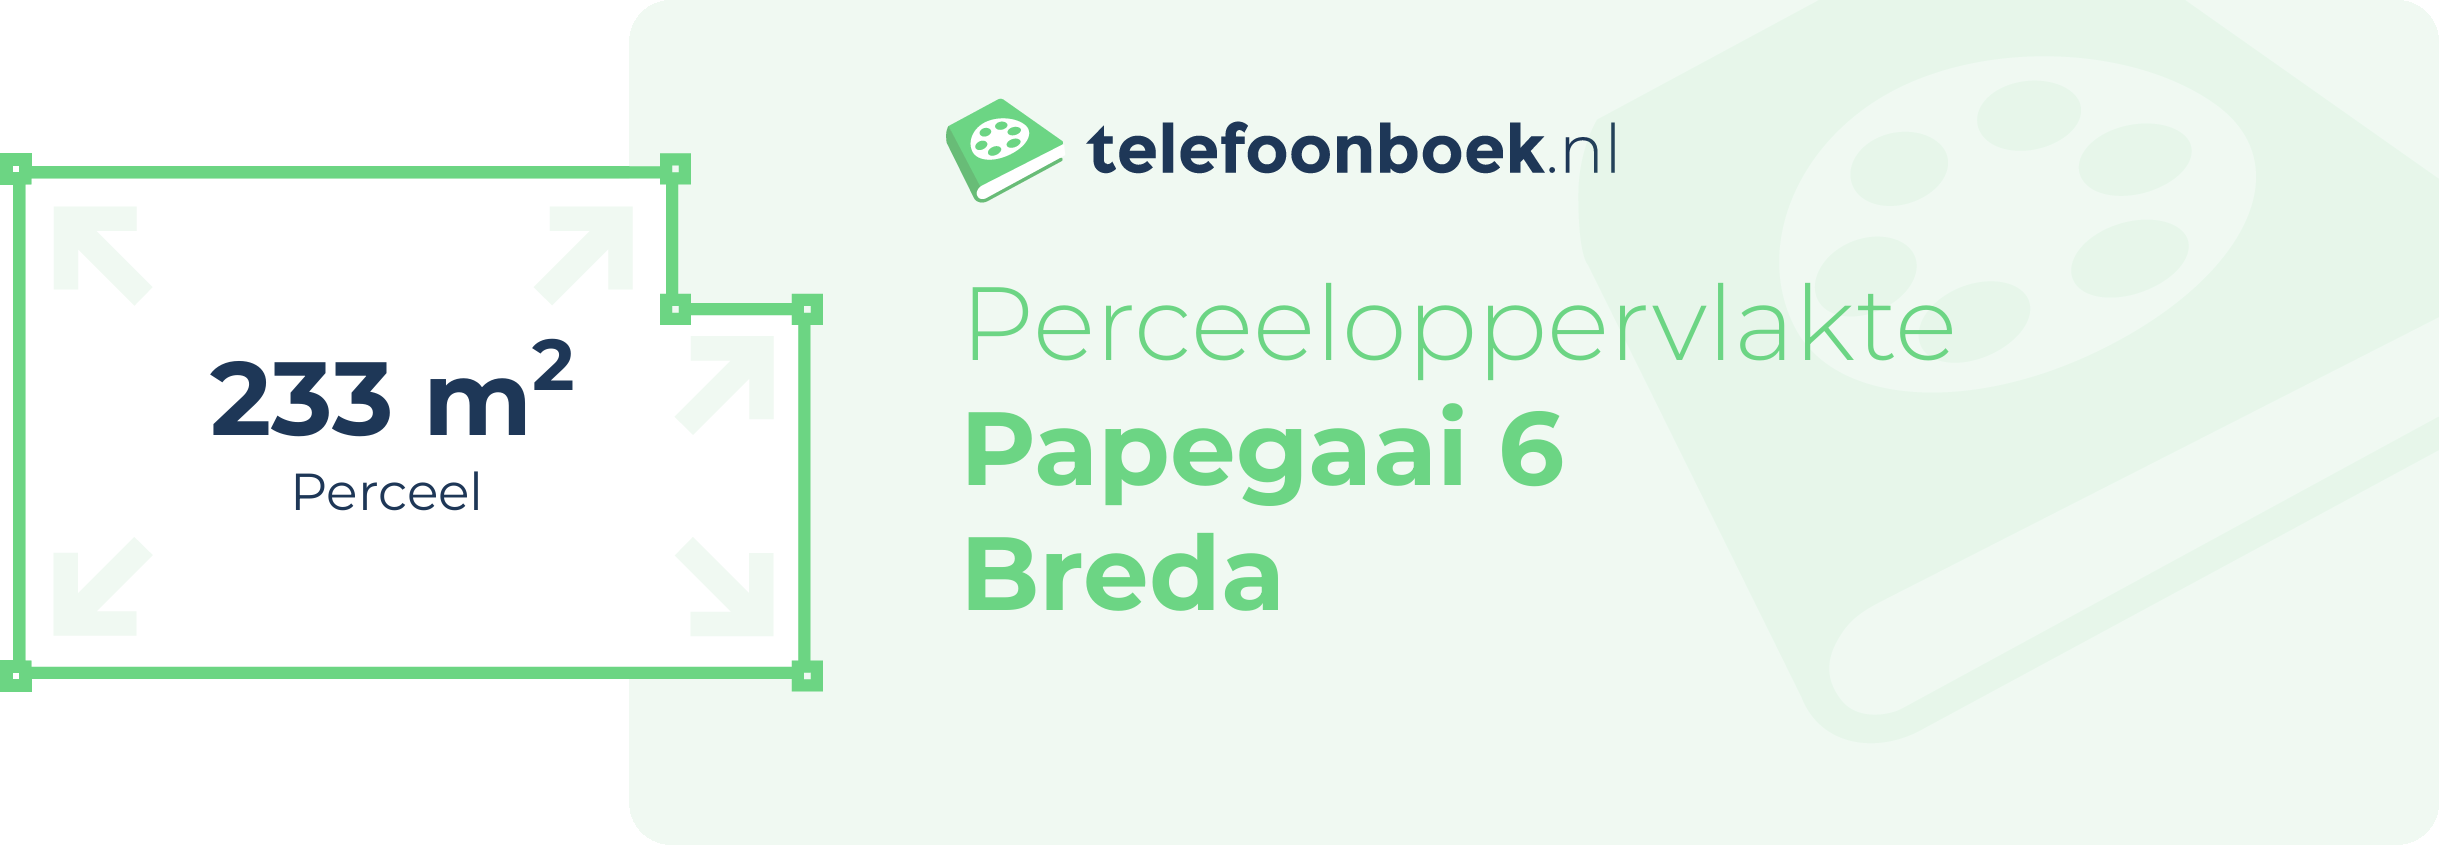 Perceeloppervlakte Papegaai 6 Breda